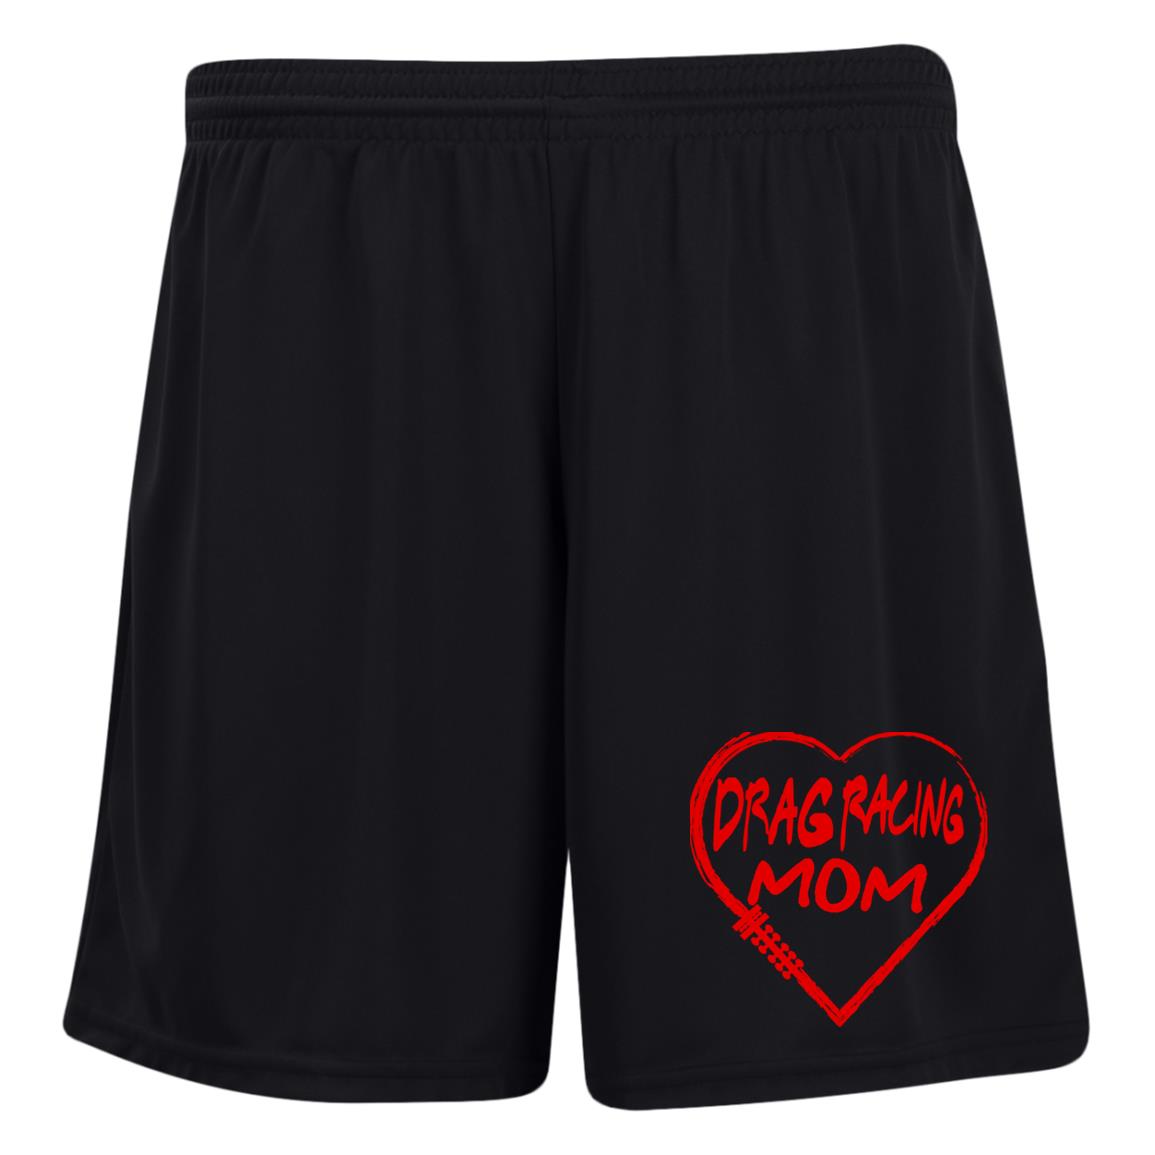 Drag Racing Mom Heart Ladies' Moisture-Wicking 7 inch Inseam Training Shorts